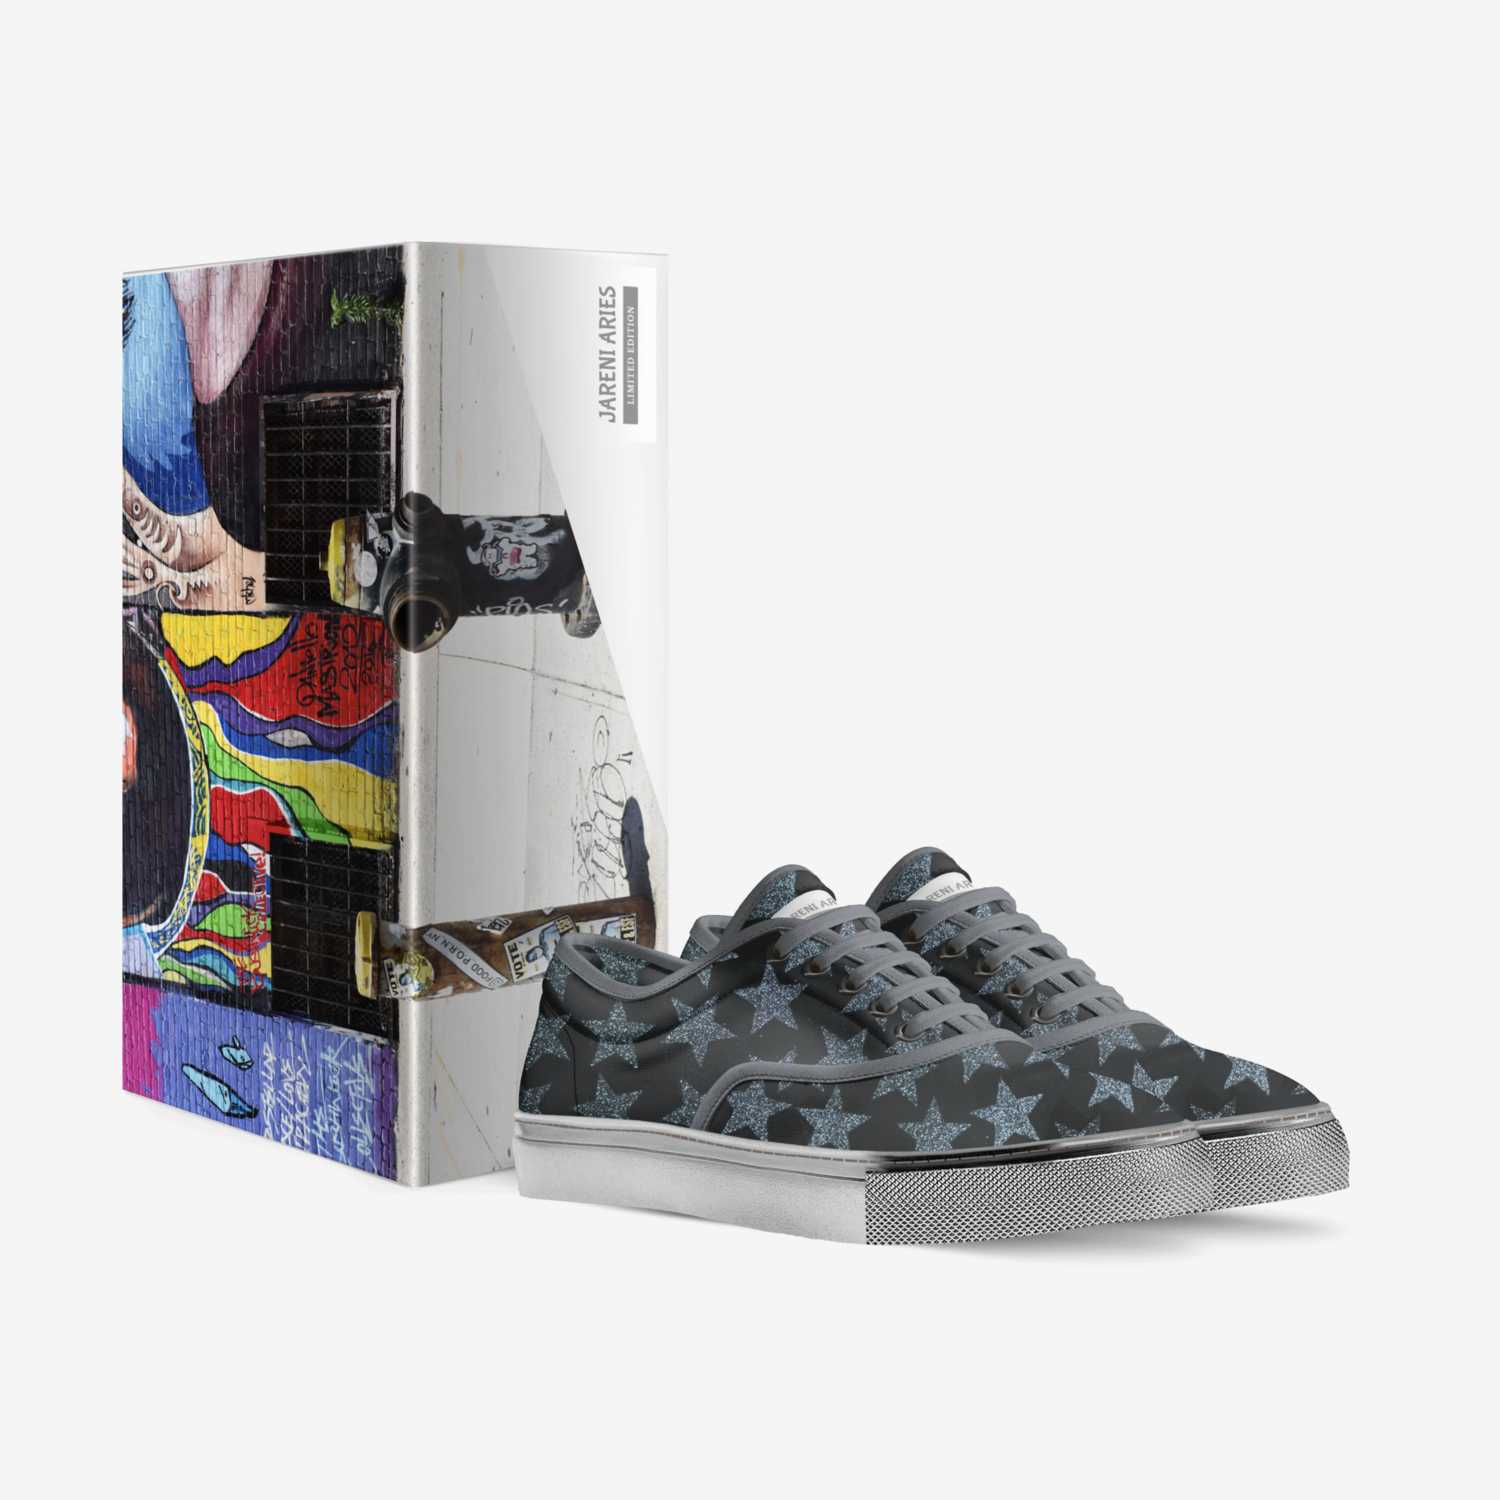 JARENI ARIES custom made in Italy shoes by John Samano | Box view